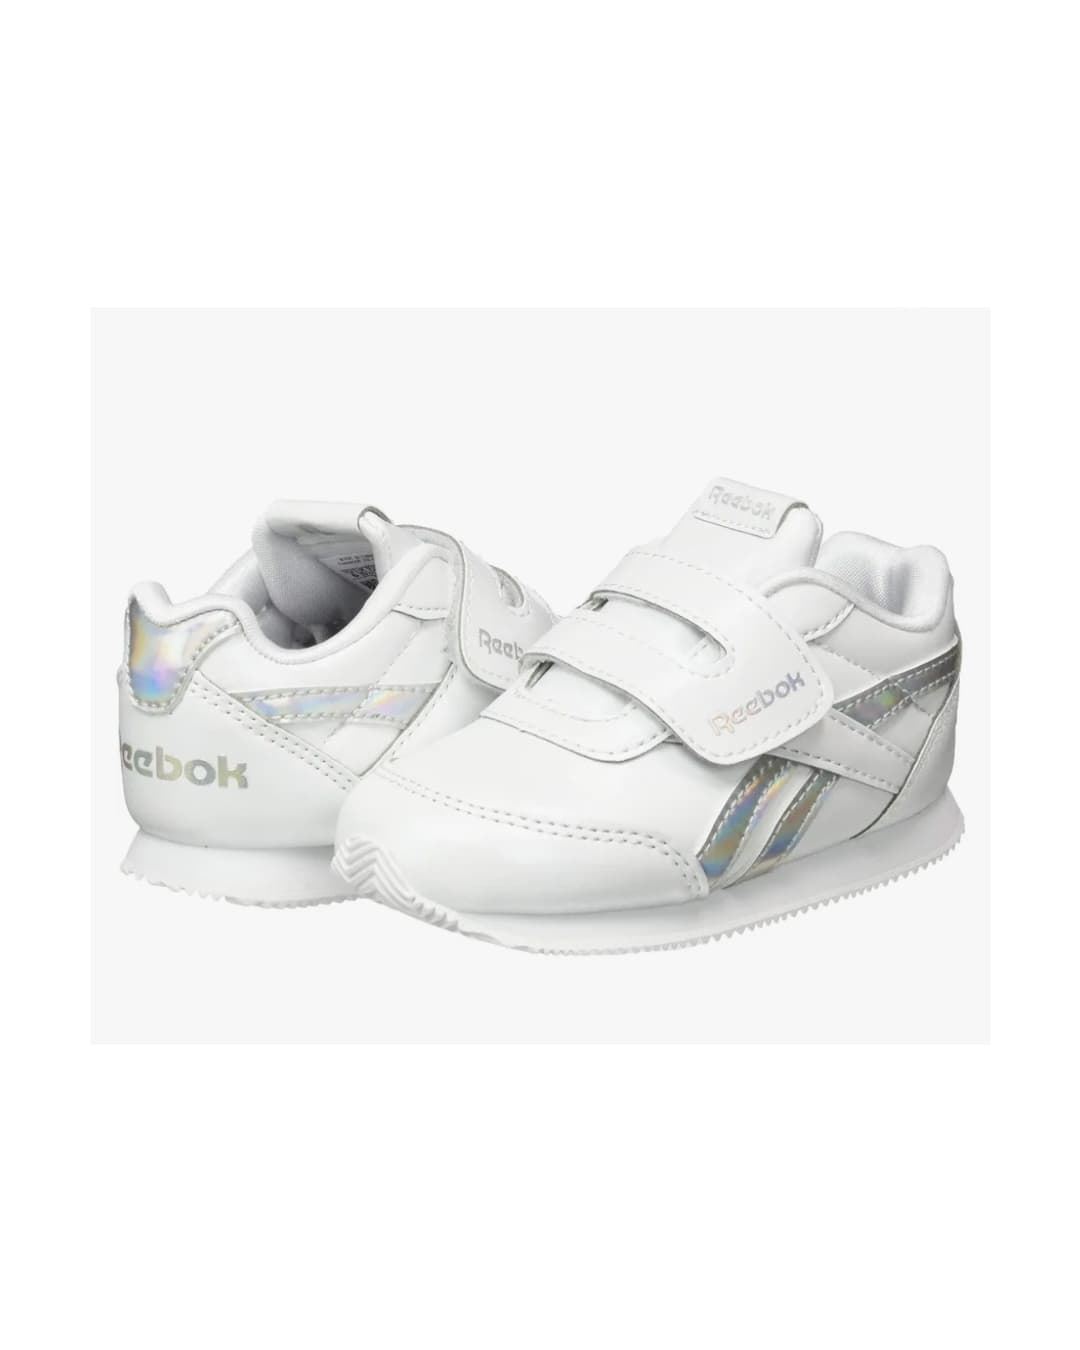 Reebok Royal Cljog Girl's Sneakers White Silver - Image 3